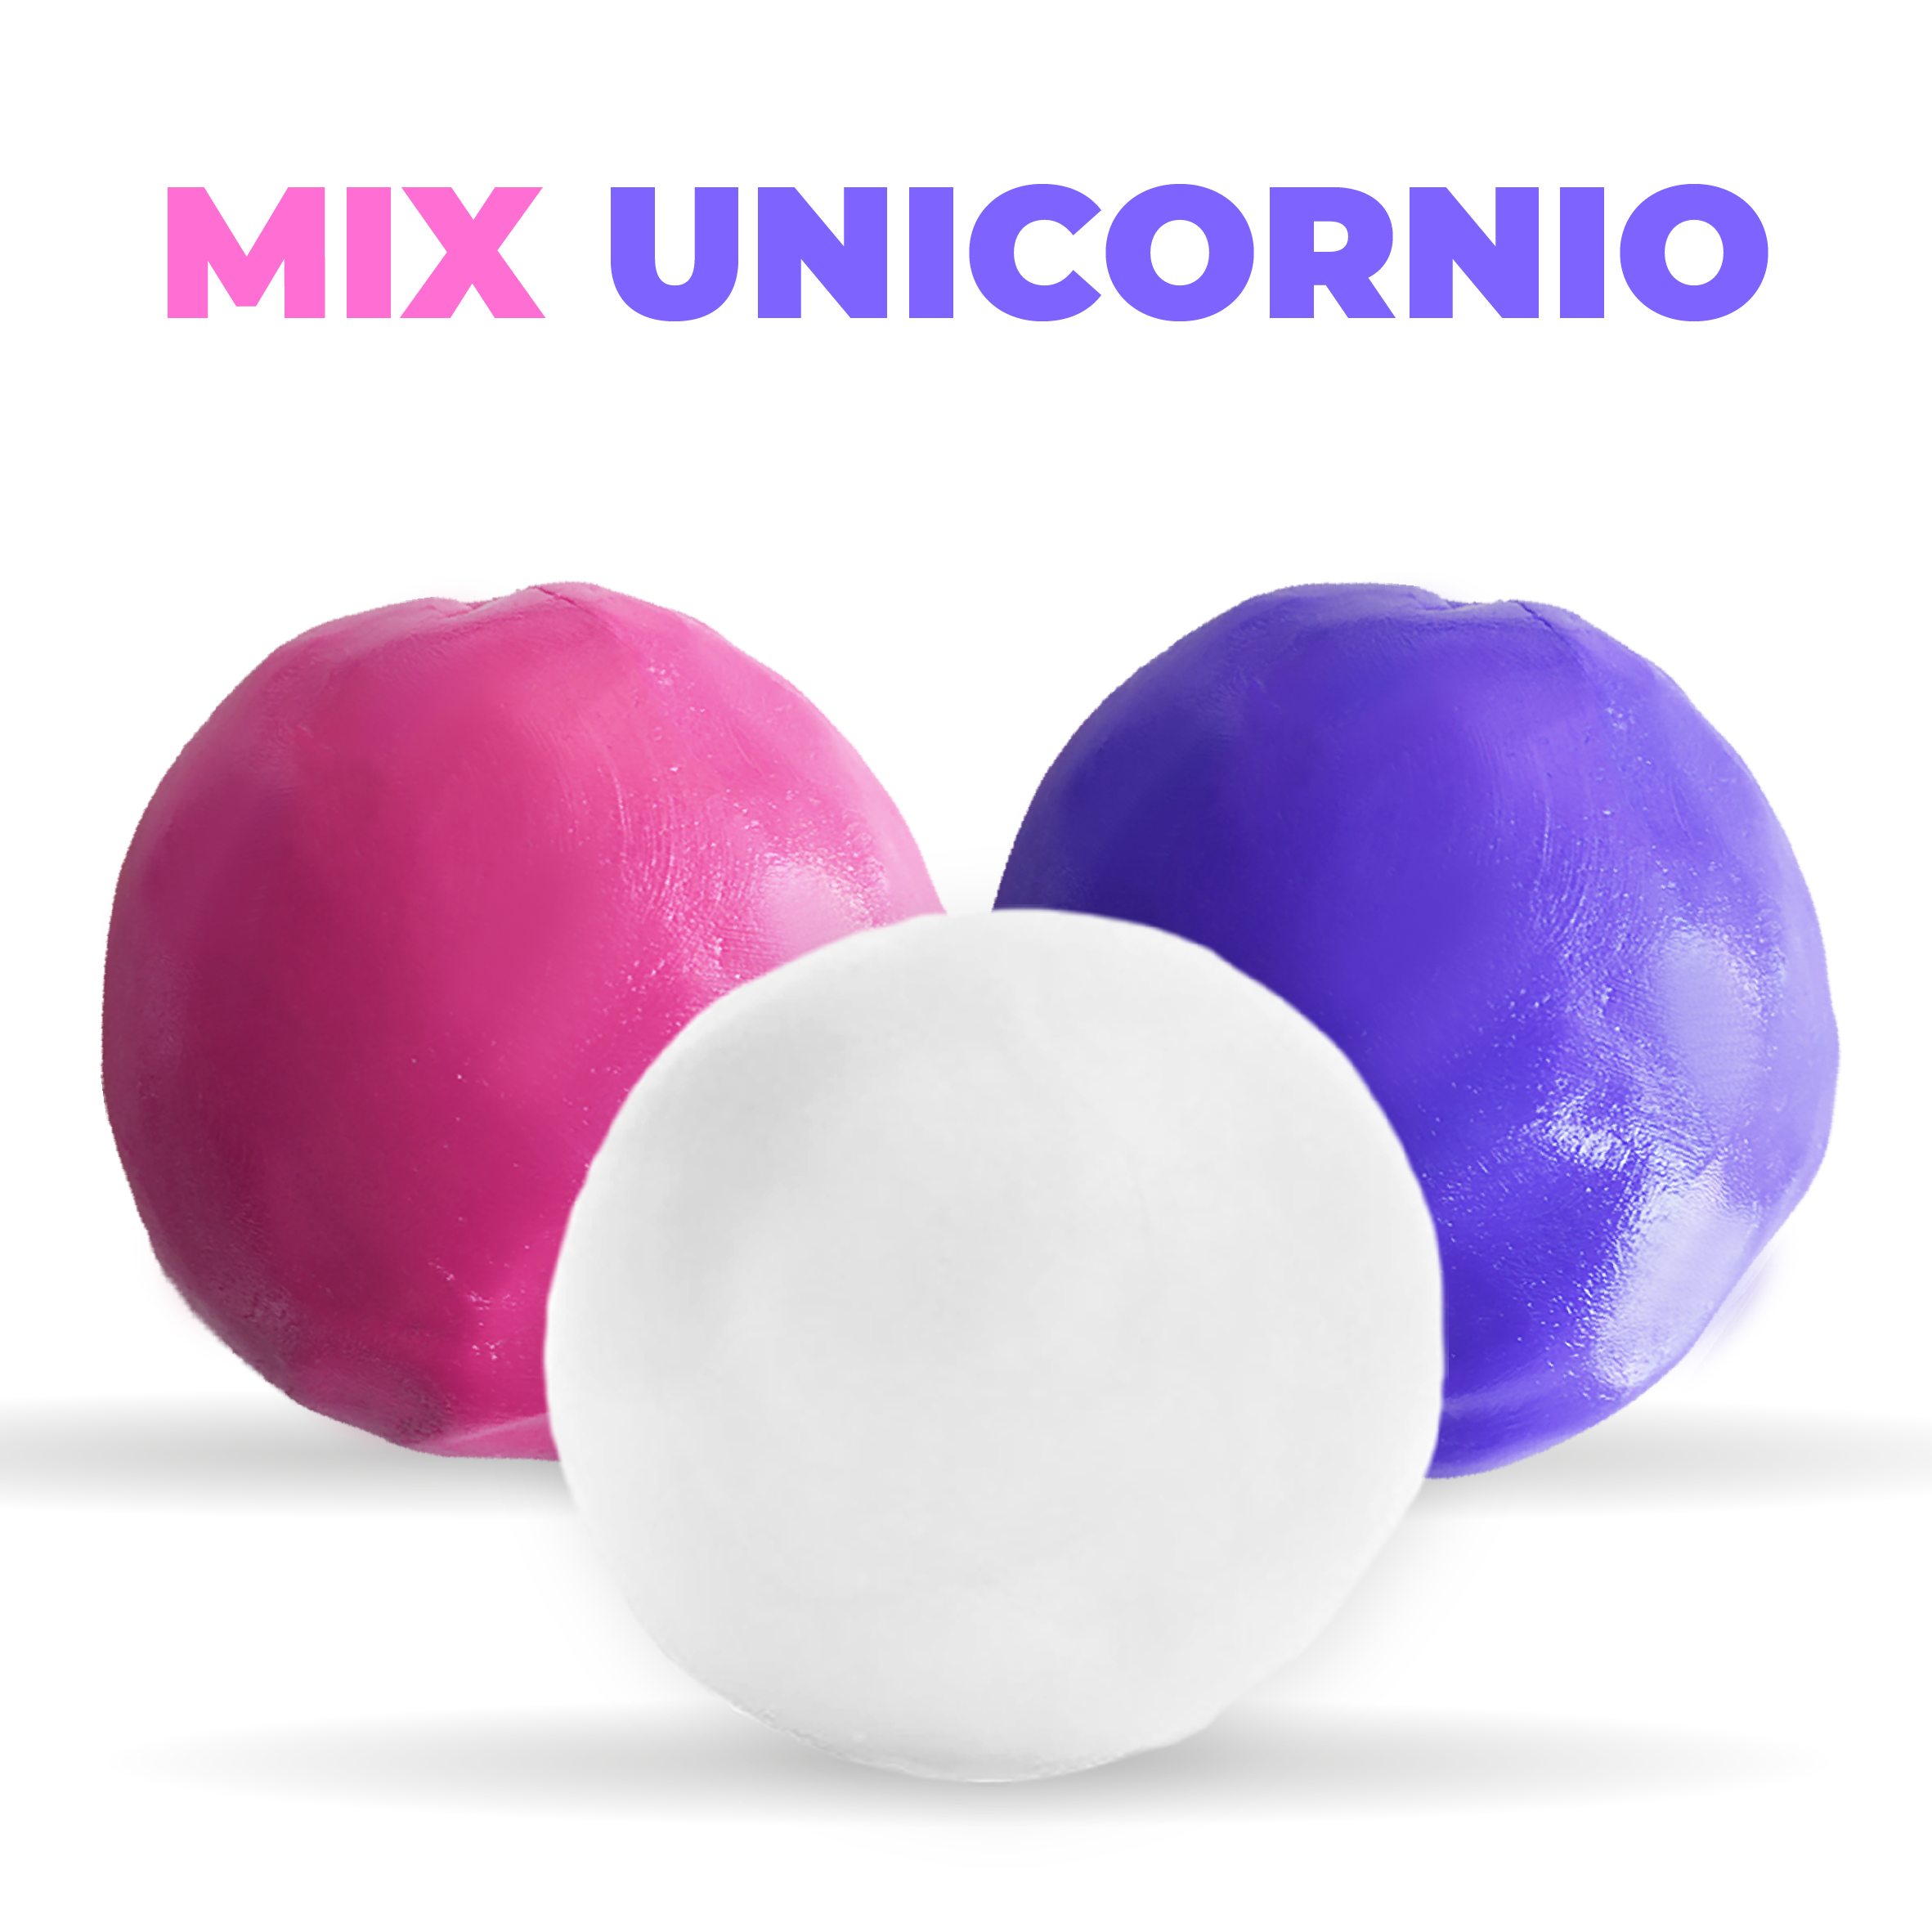 Fondant Mix Unicornio